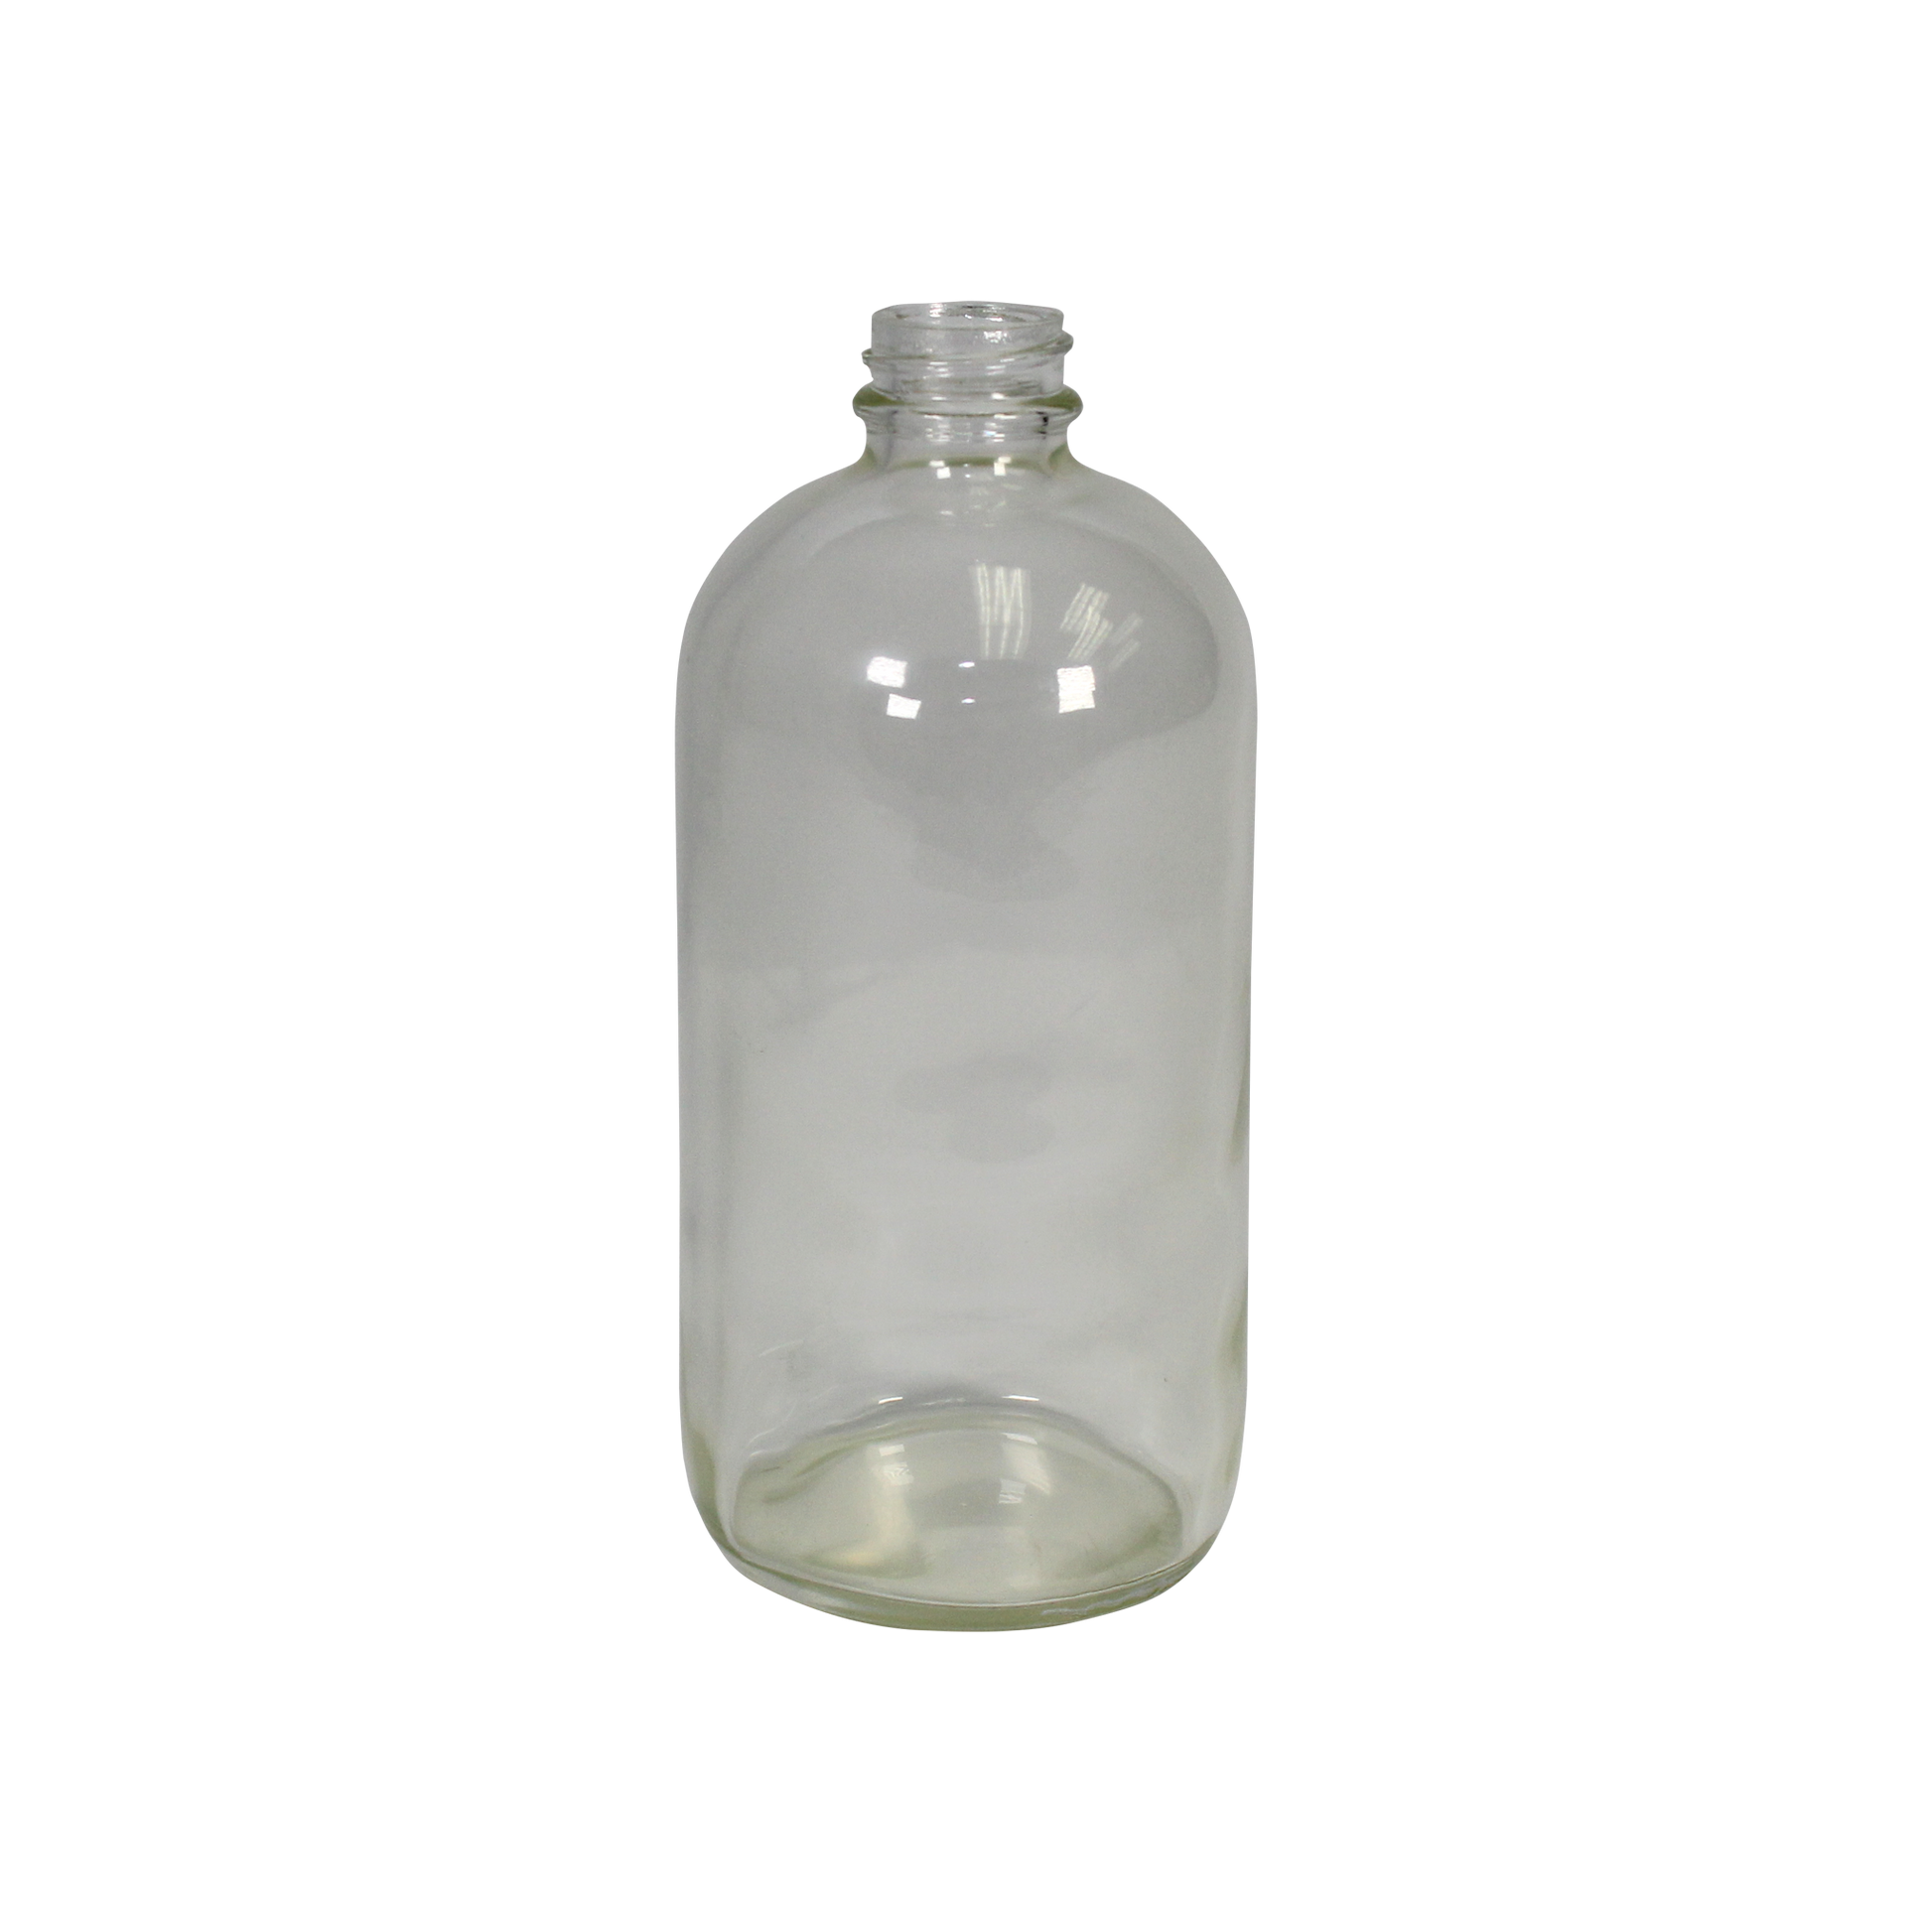 16 oz Clear Glass Boston Round Bottle - 28/400 Finish